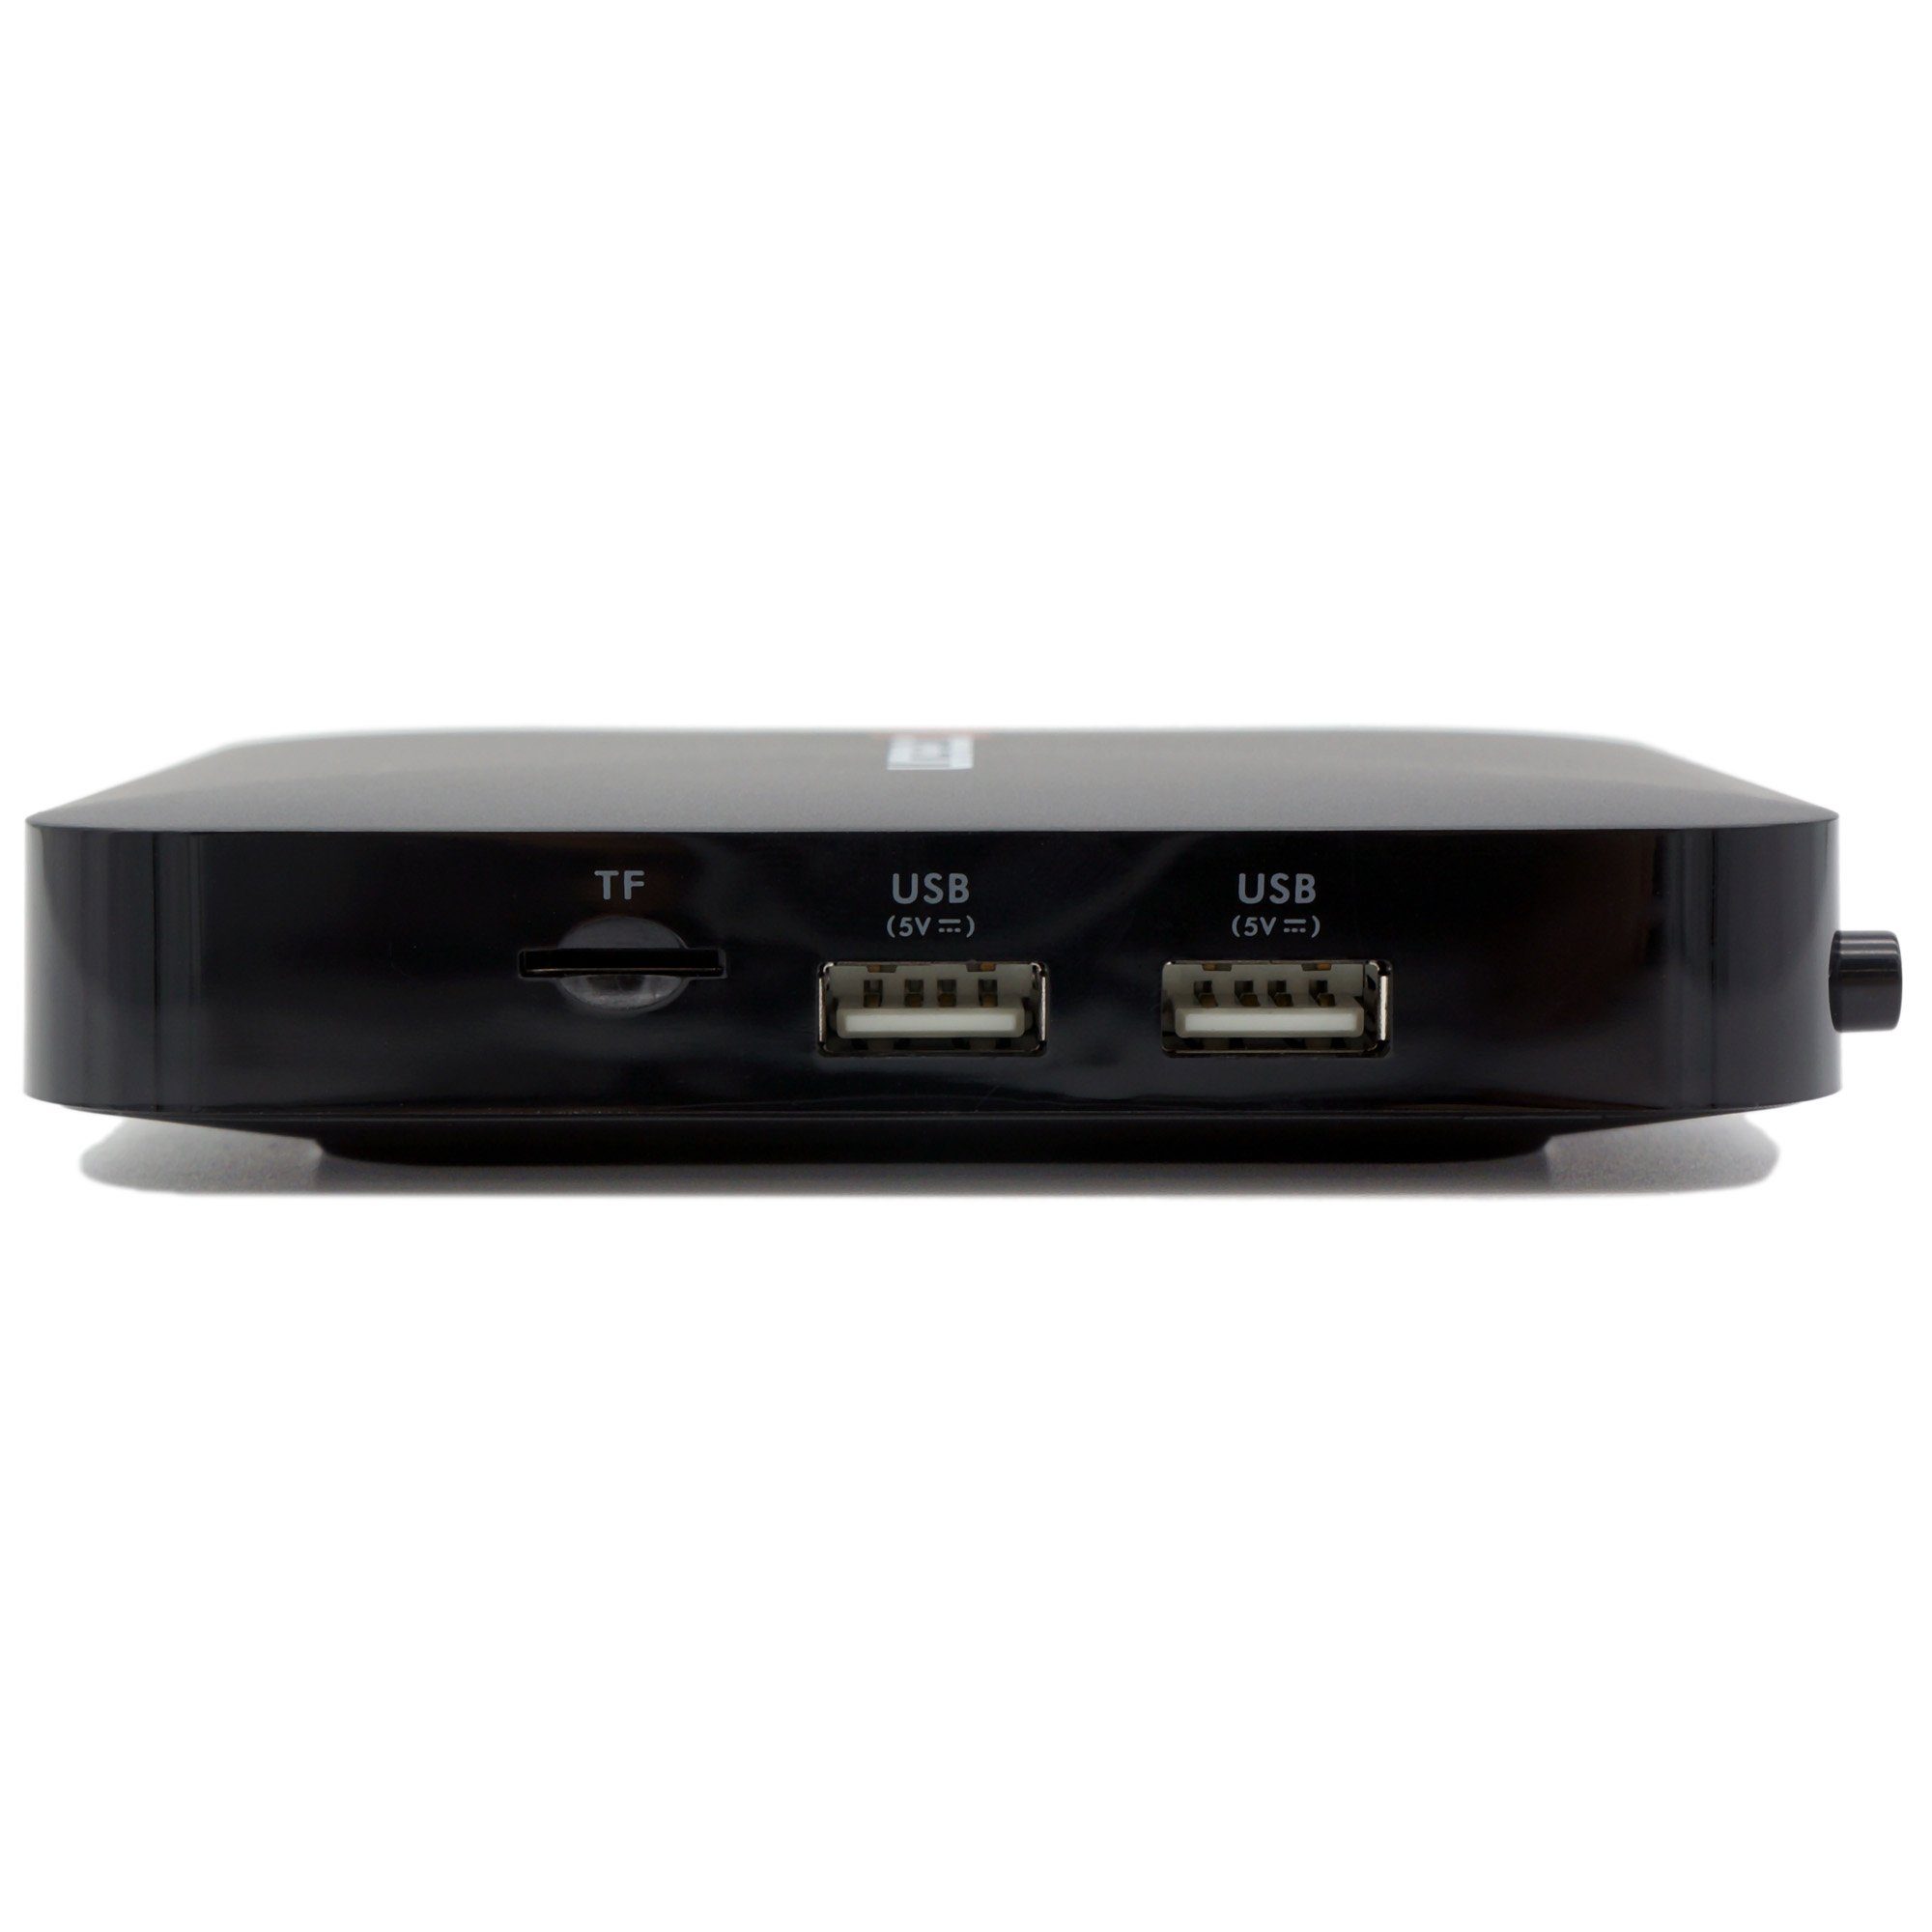 Set-Top Mbit/s IPTV OCTAGON Streaming-Box IP UHD HEVC 5G + Smart 600 SX988 4K H.265 TV Box